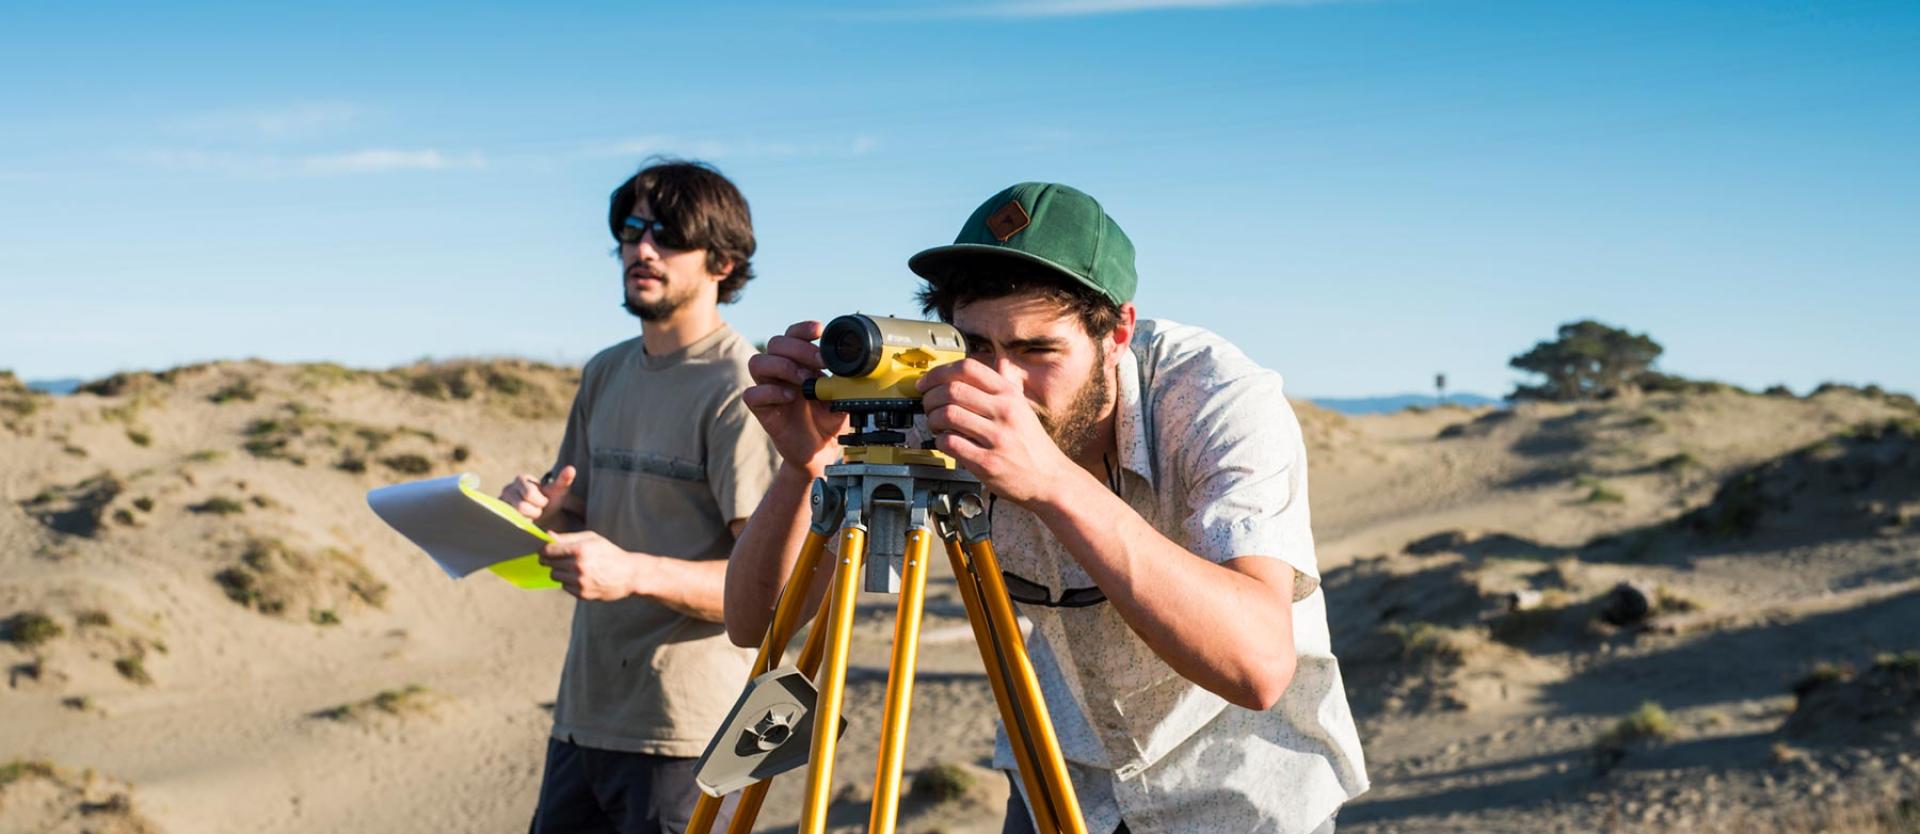 Students on the coast surveying